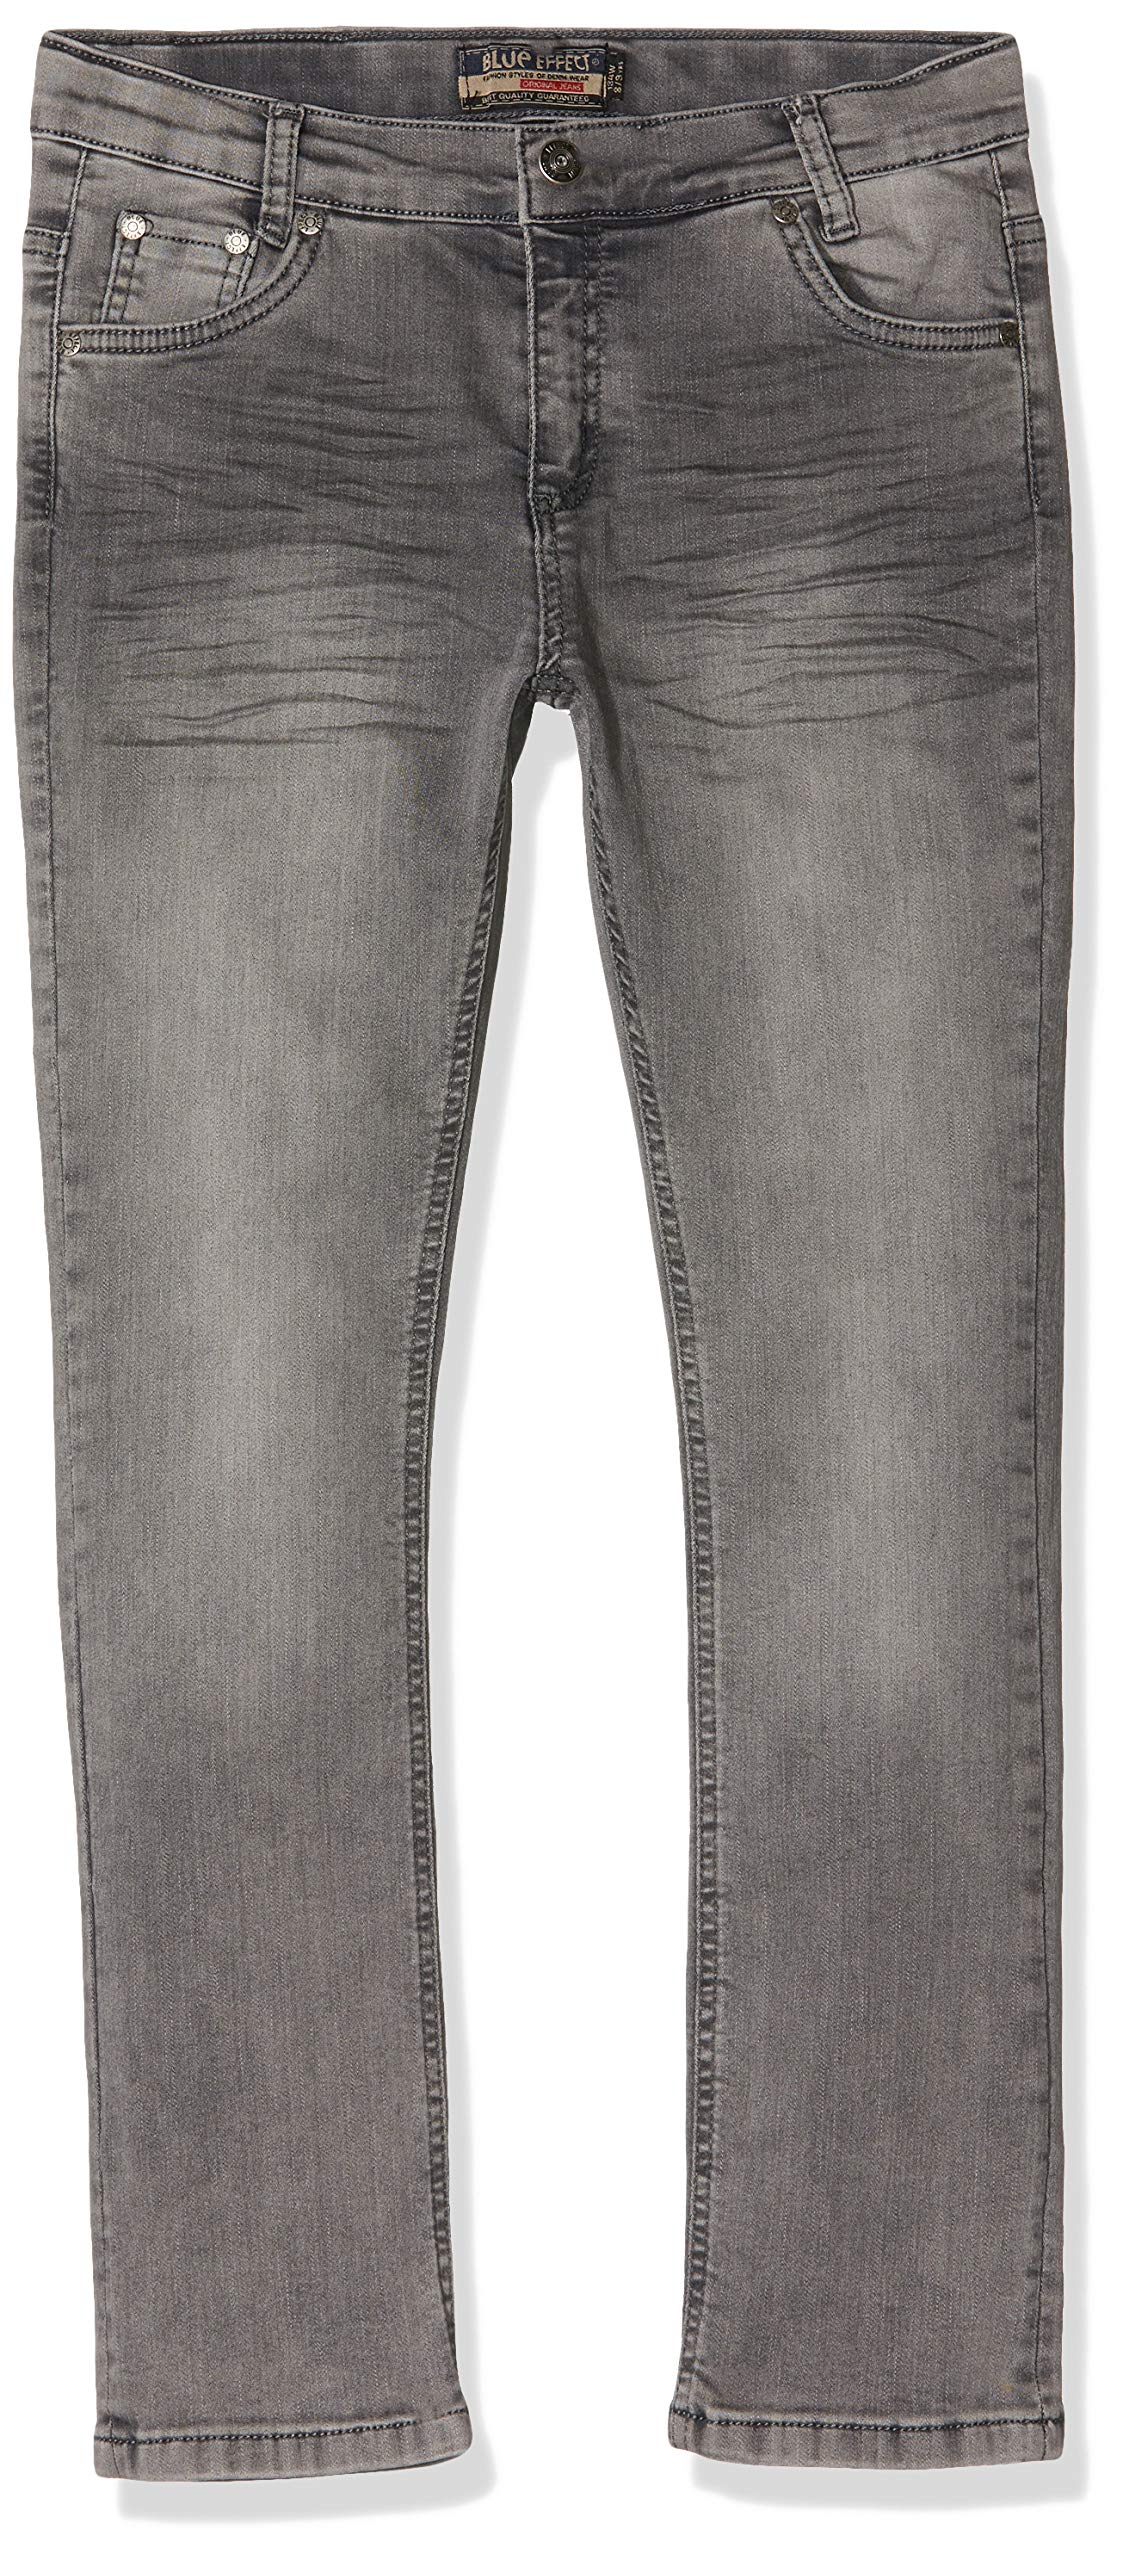 Blue Effect 0226 Jungen Ultrastretch Jeans, Grau (Grey denim), 170